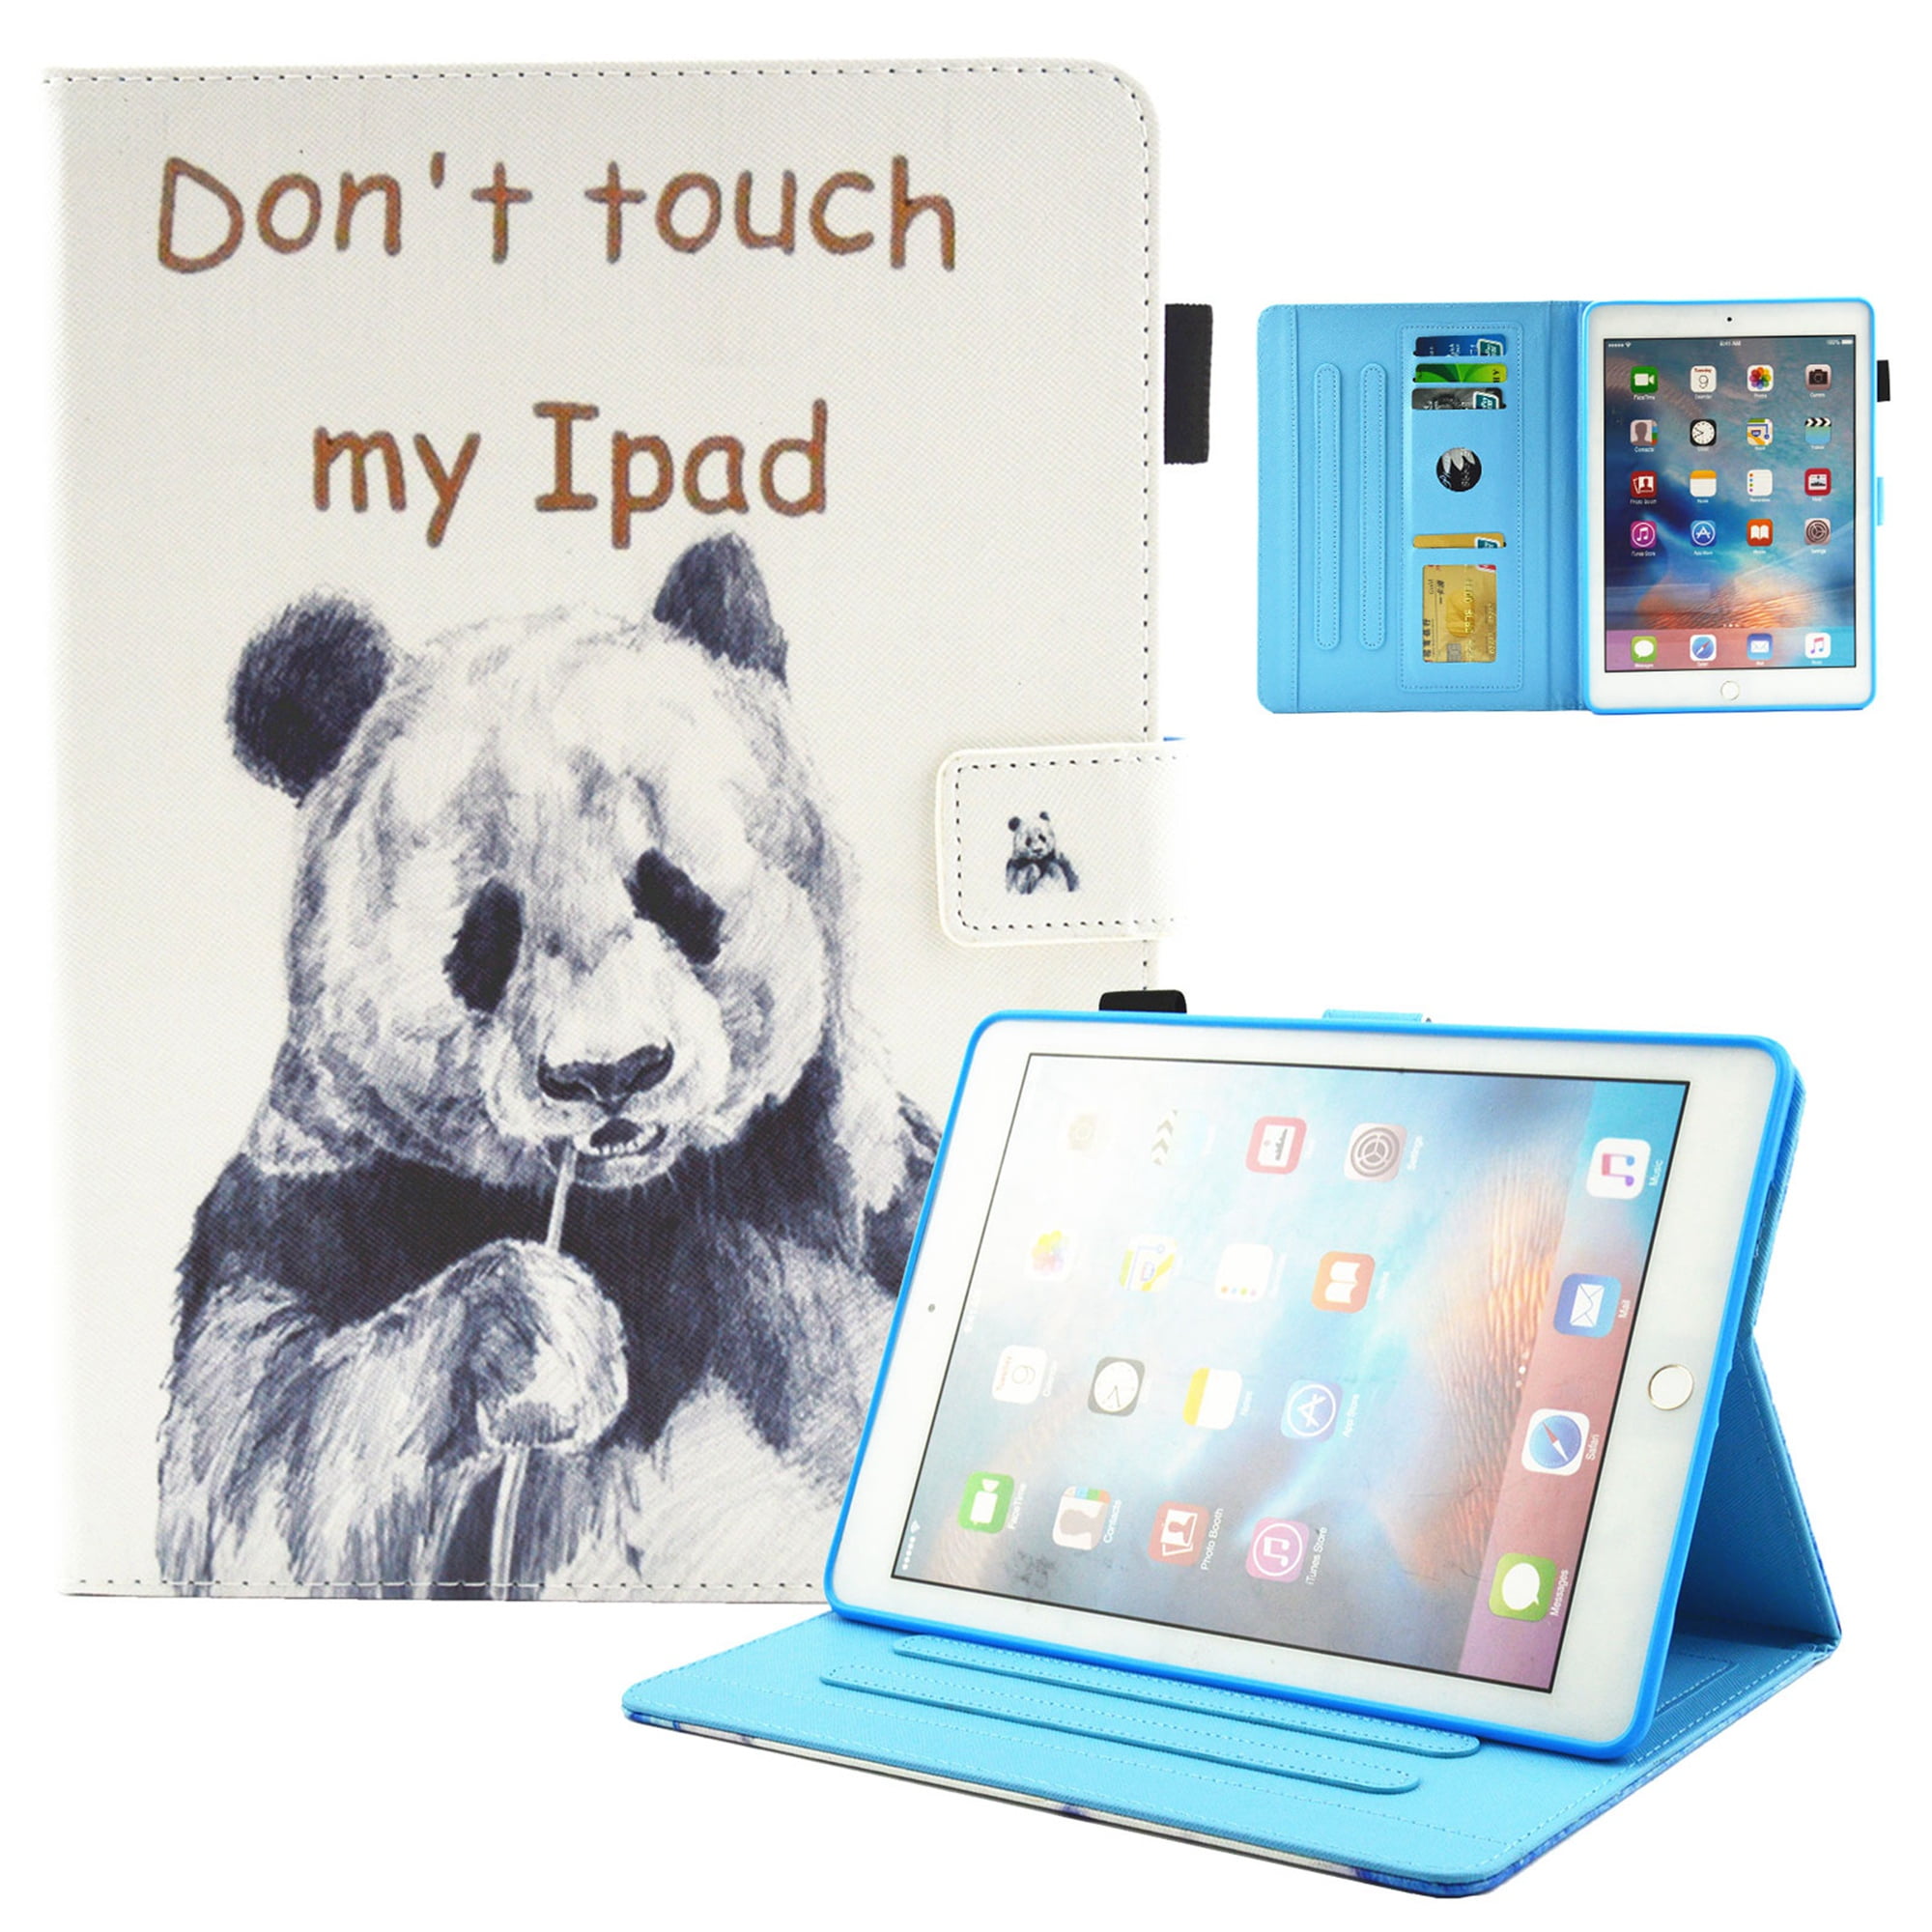 iPad Air Case Auto Wake / Sleep iPad Air2 Case Dteck PU Leather Folio Smart Cover Lightweight Stand Case for New iPad 9.7 Inch 2017/iPad Air 2/iPad Air,Black Cats New iPad 2017 9.7 inch Case